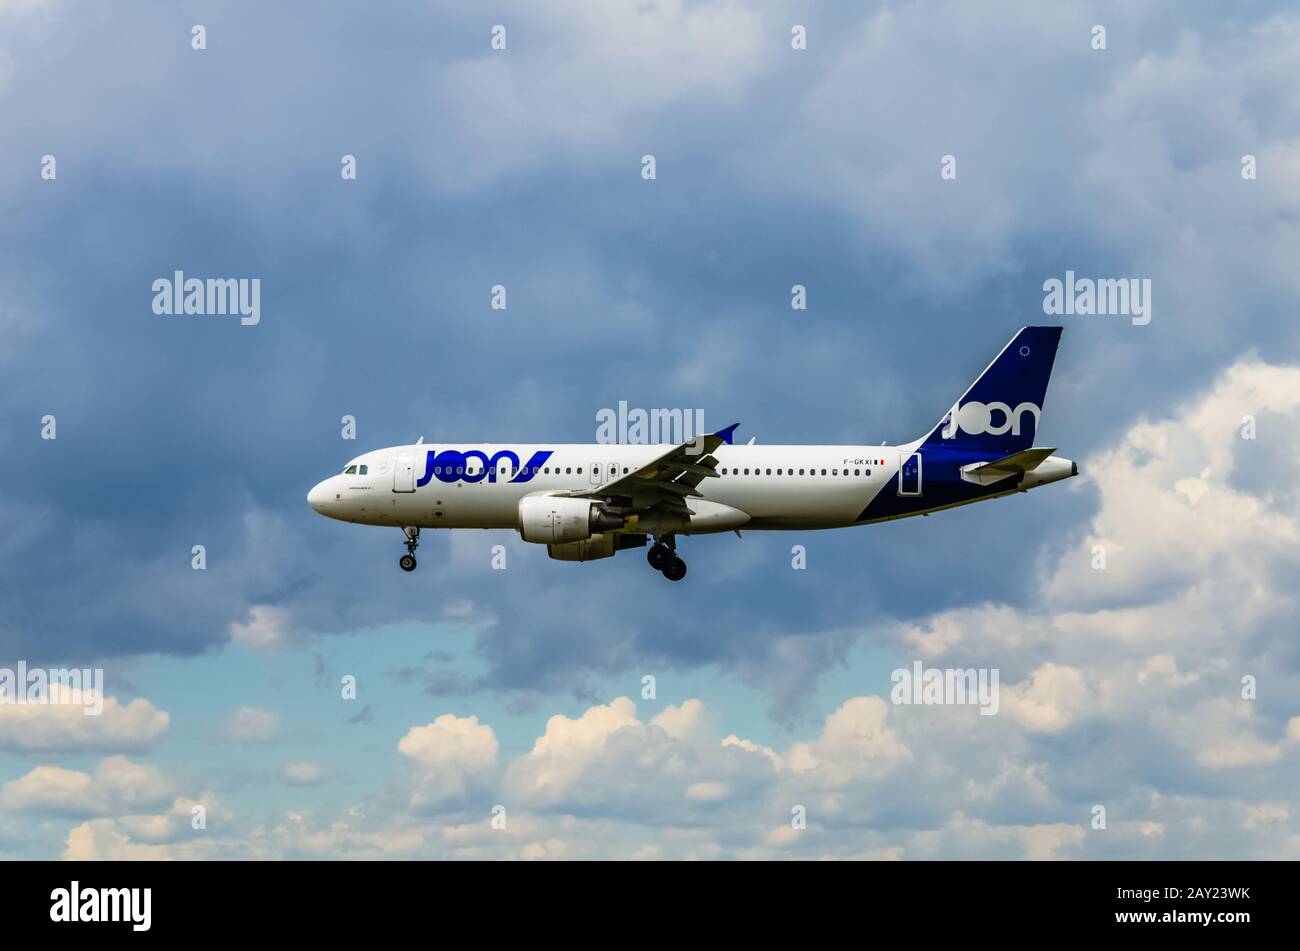 Barcelona, Spain; May 18, 2019: Joon Airfrance A320 Airbus plane, landing at Barcelona's El Prat airport Stock Photo